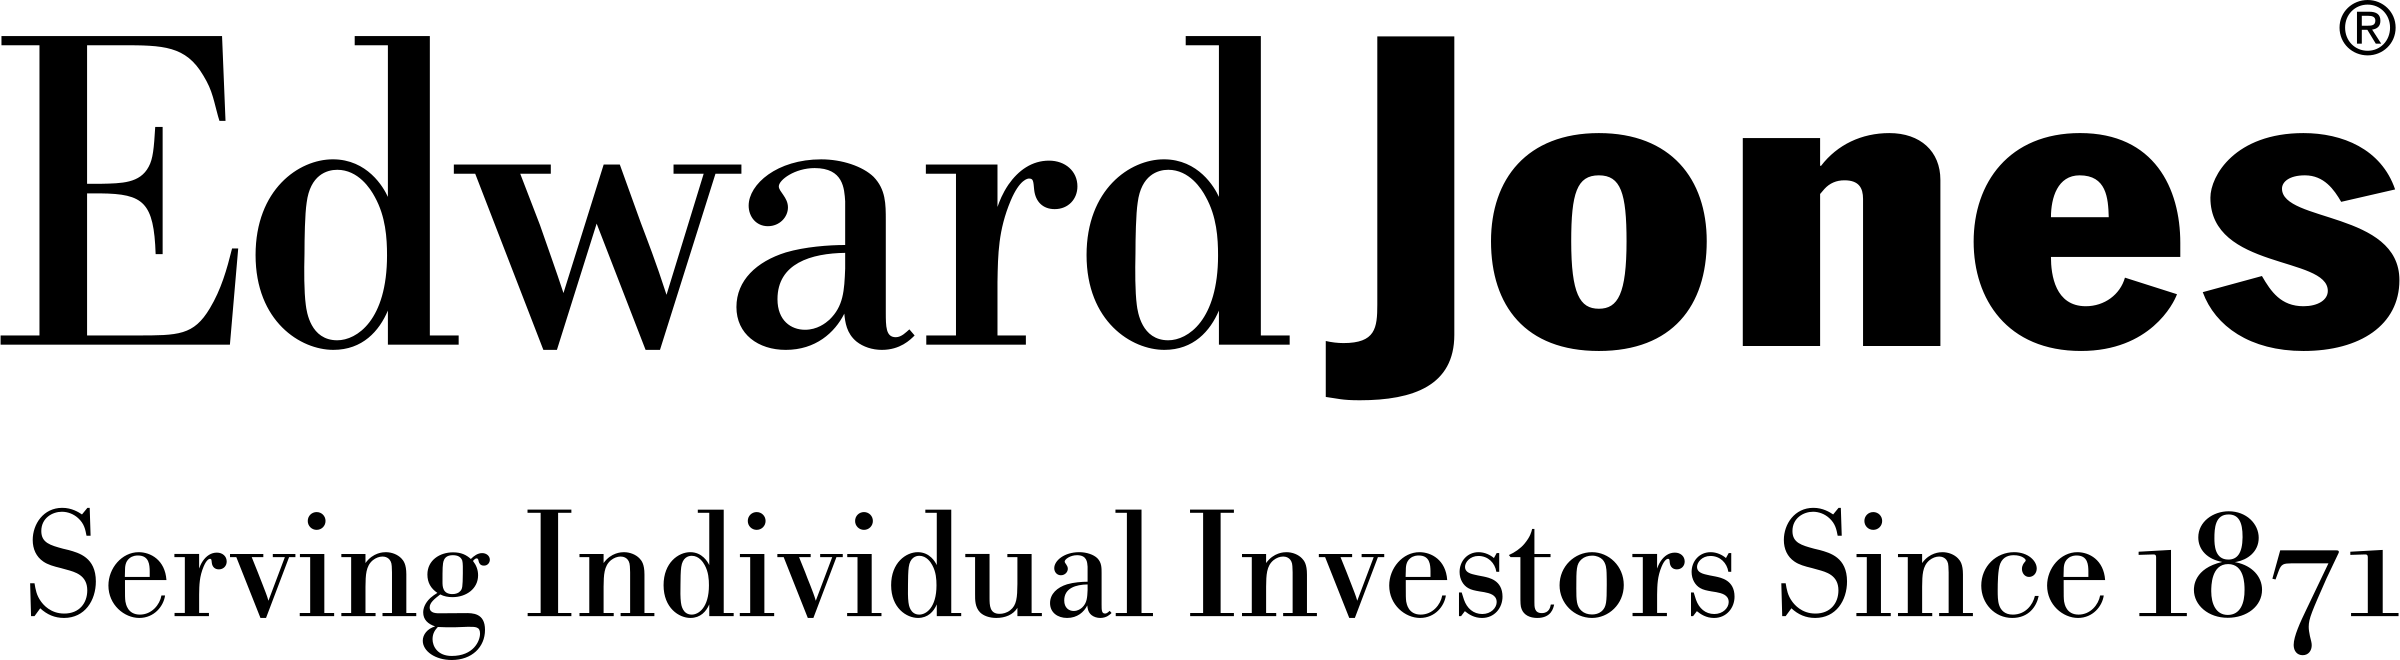 Edward Logo - Edward Jones Investment Logo PNG Transparent & SVG Vector - Freebie ...